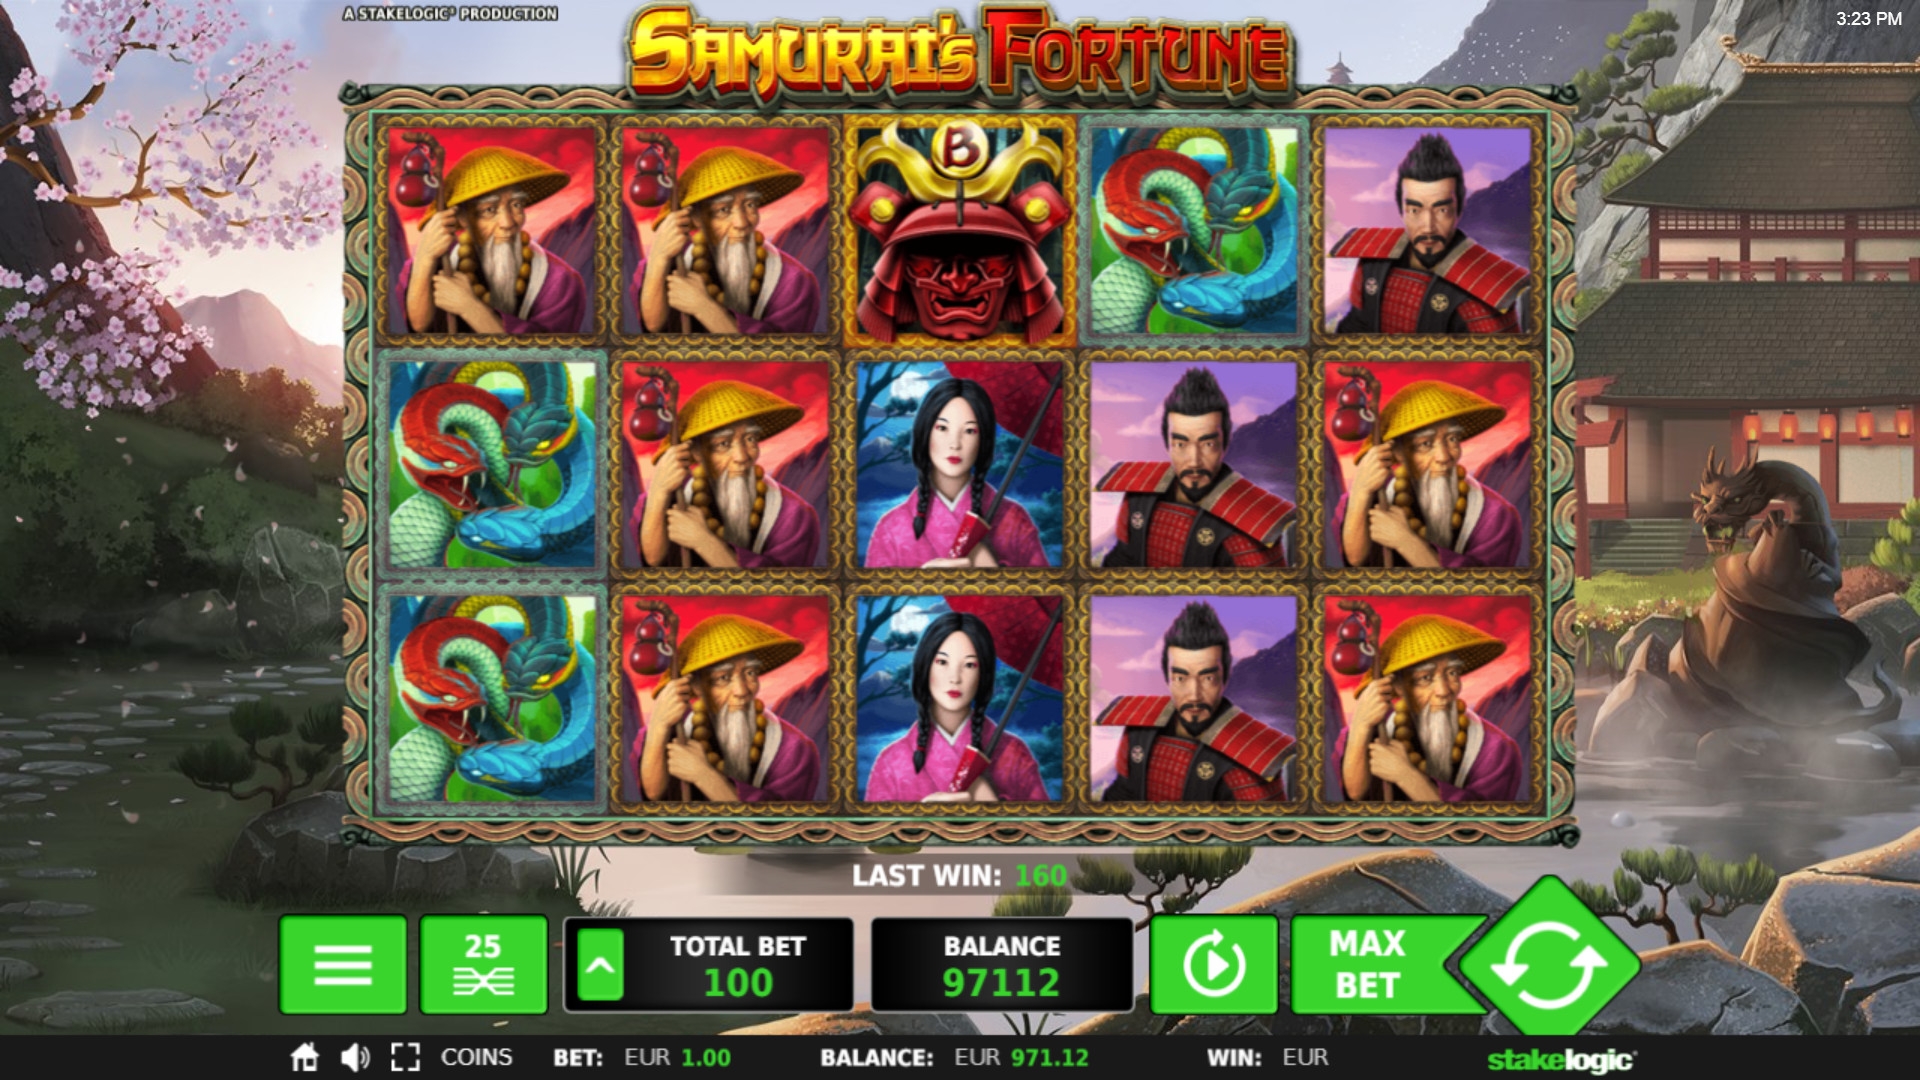 Samurai’s Fortune (Samurai’s Fortune) from category Slots